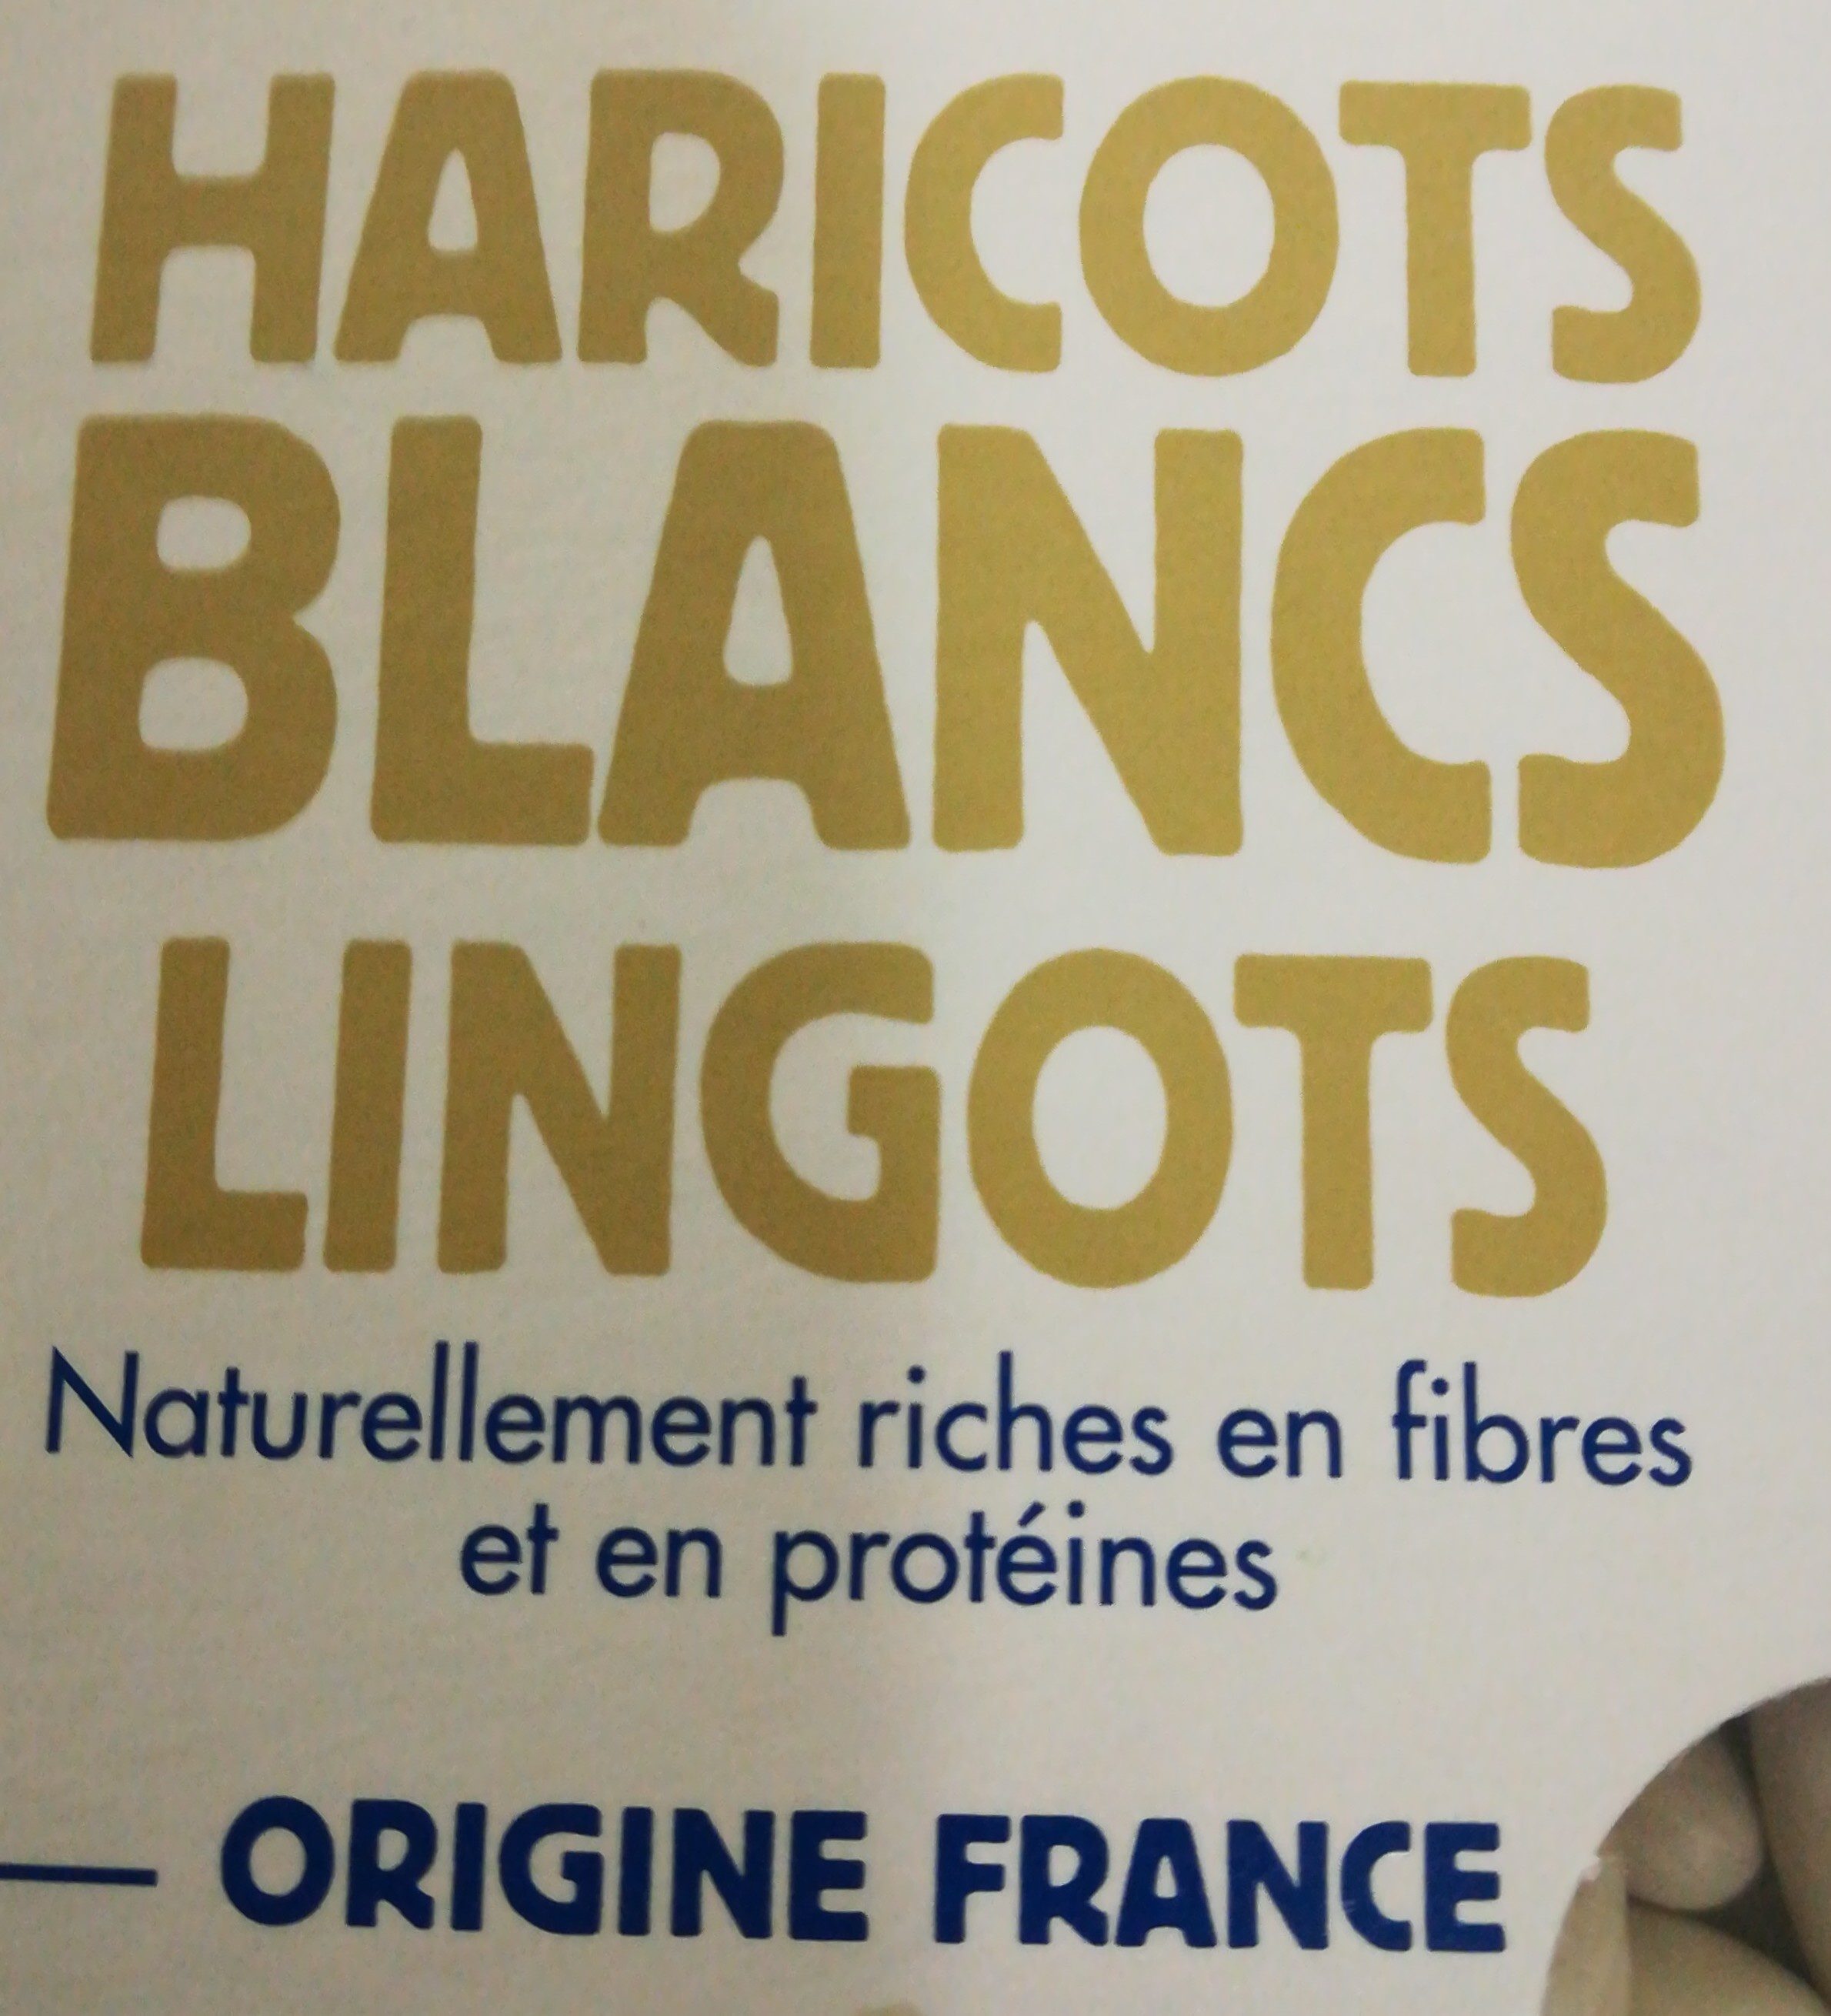 Haricots blancs Lingots France - المكونات - fr